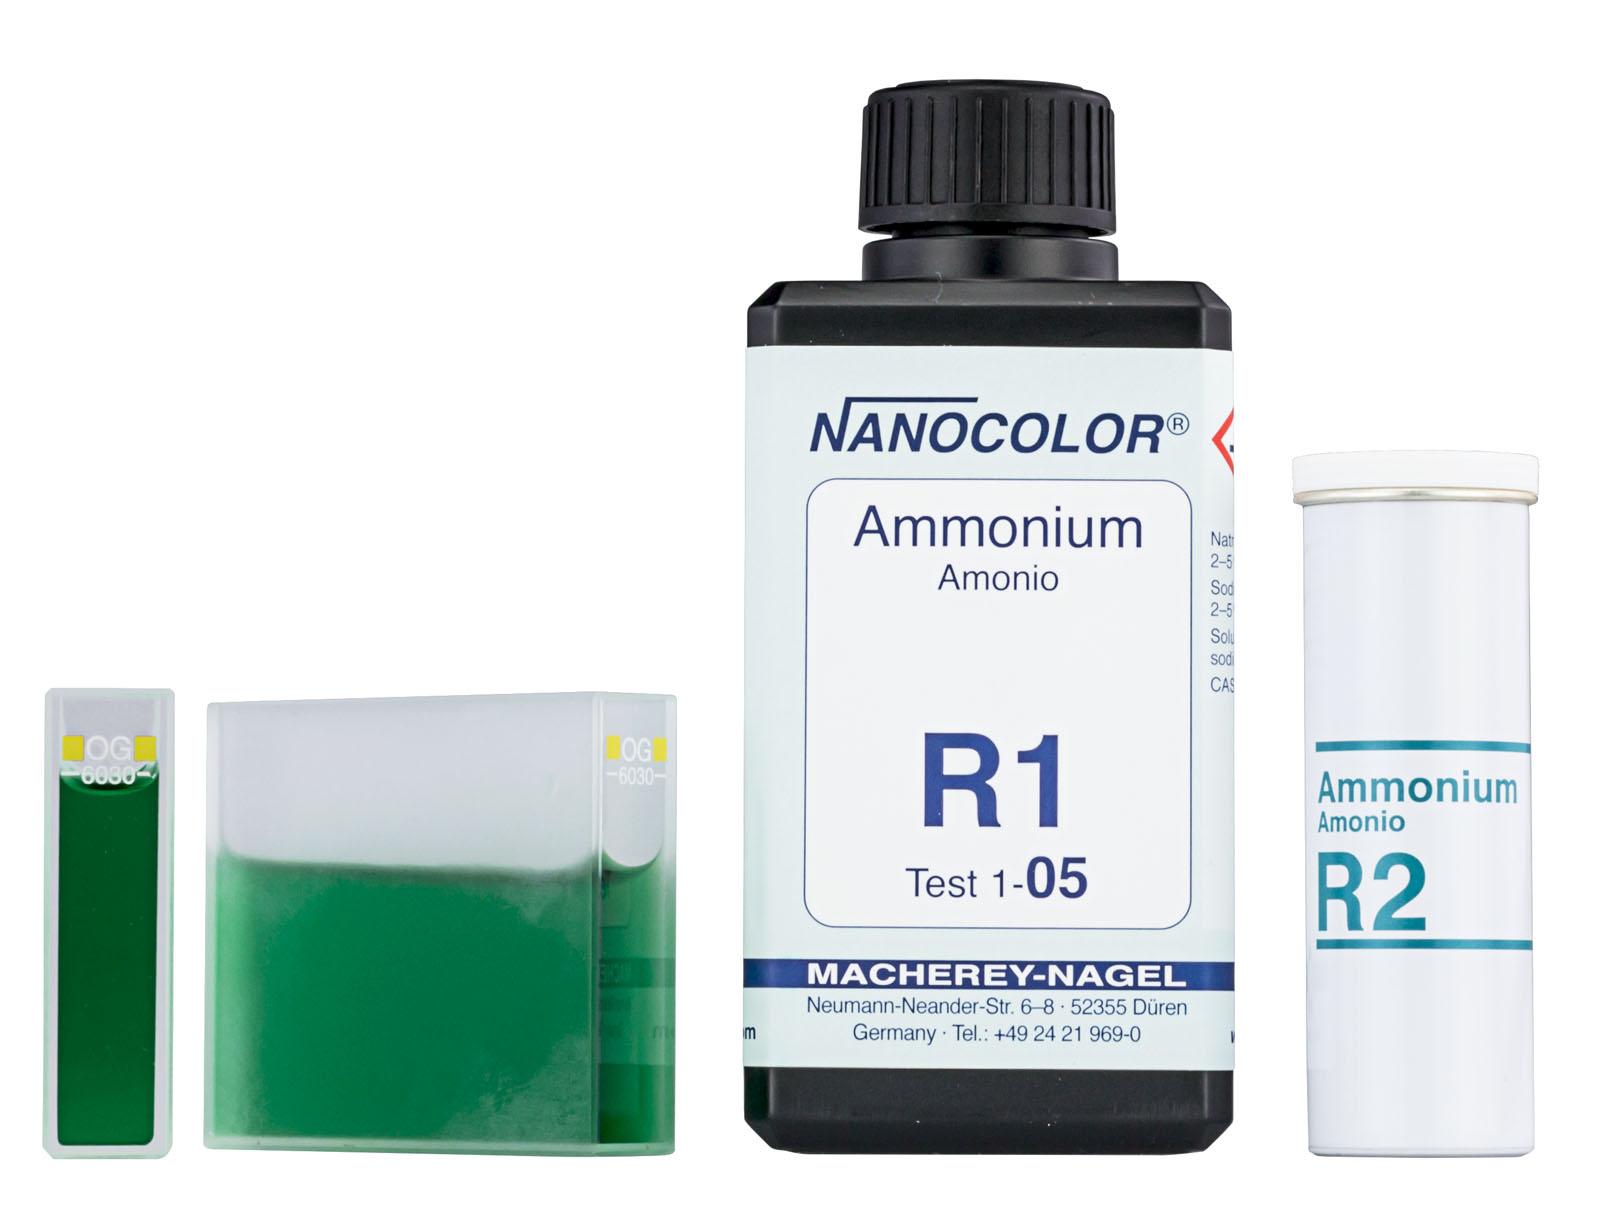 NANOCOLOR® Ammonium Standard Test